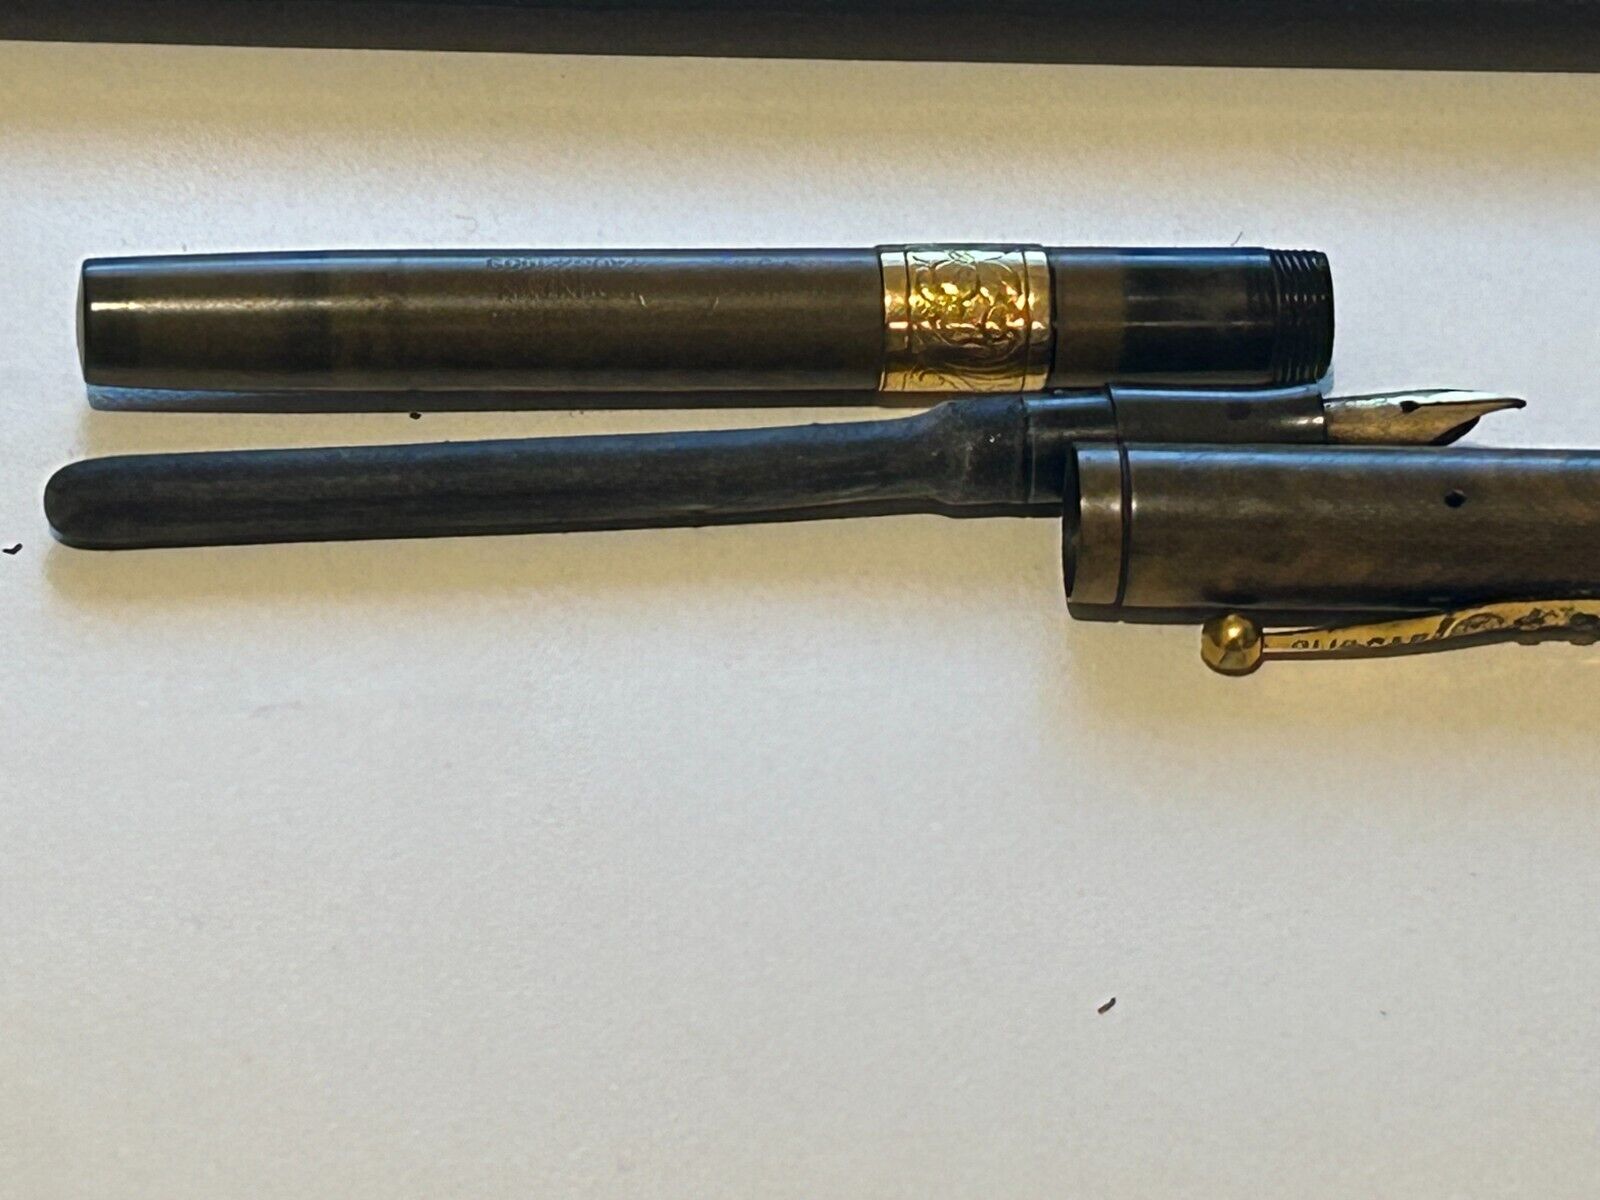 Vintage Waterman 52 fountain pen-14kt gold nib-fine-medium-flexible-New rubber